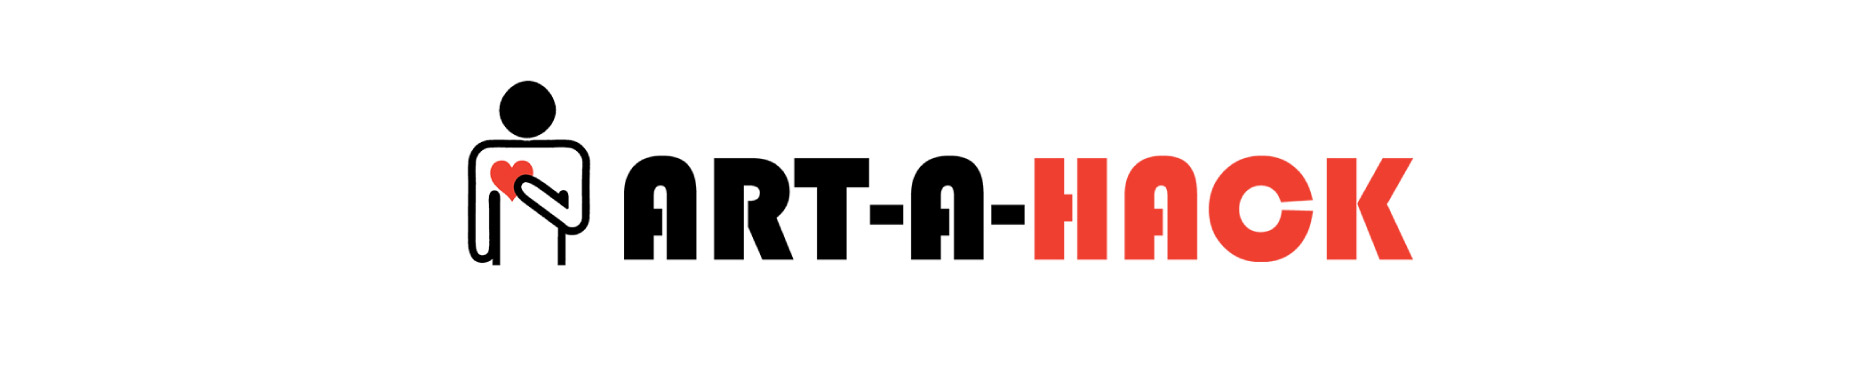 Art-a-hack logo